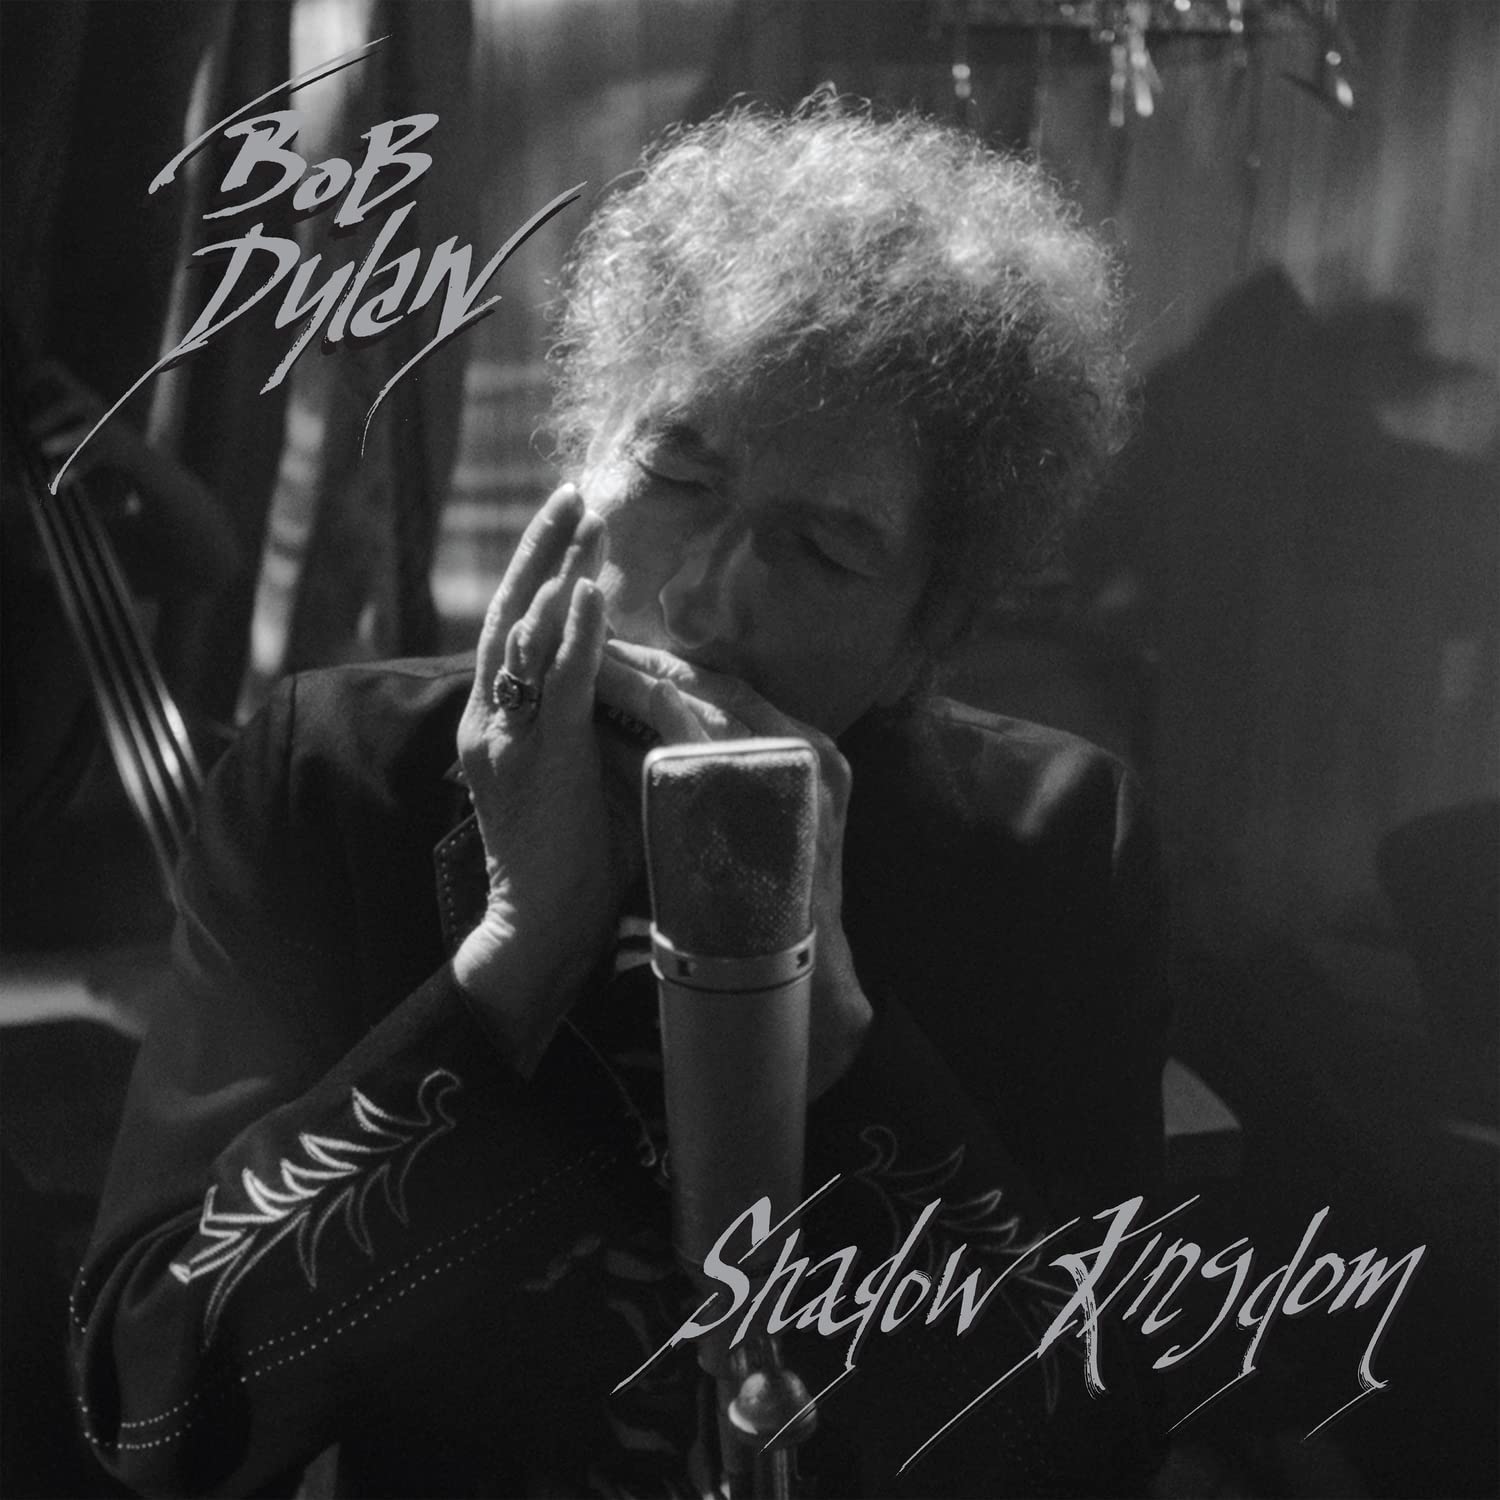 Copertina Vinile 33 giri Shadow Kingdom di Bob Dylan